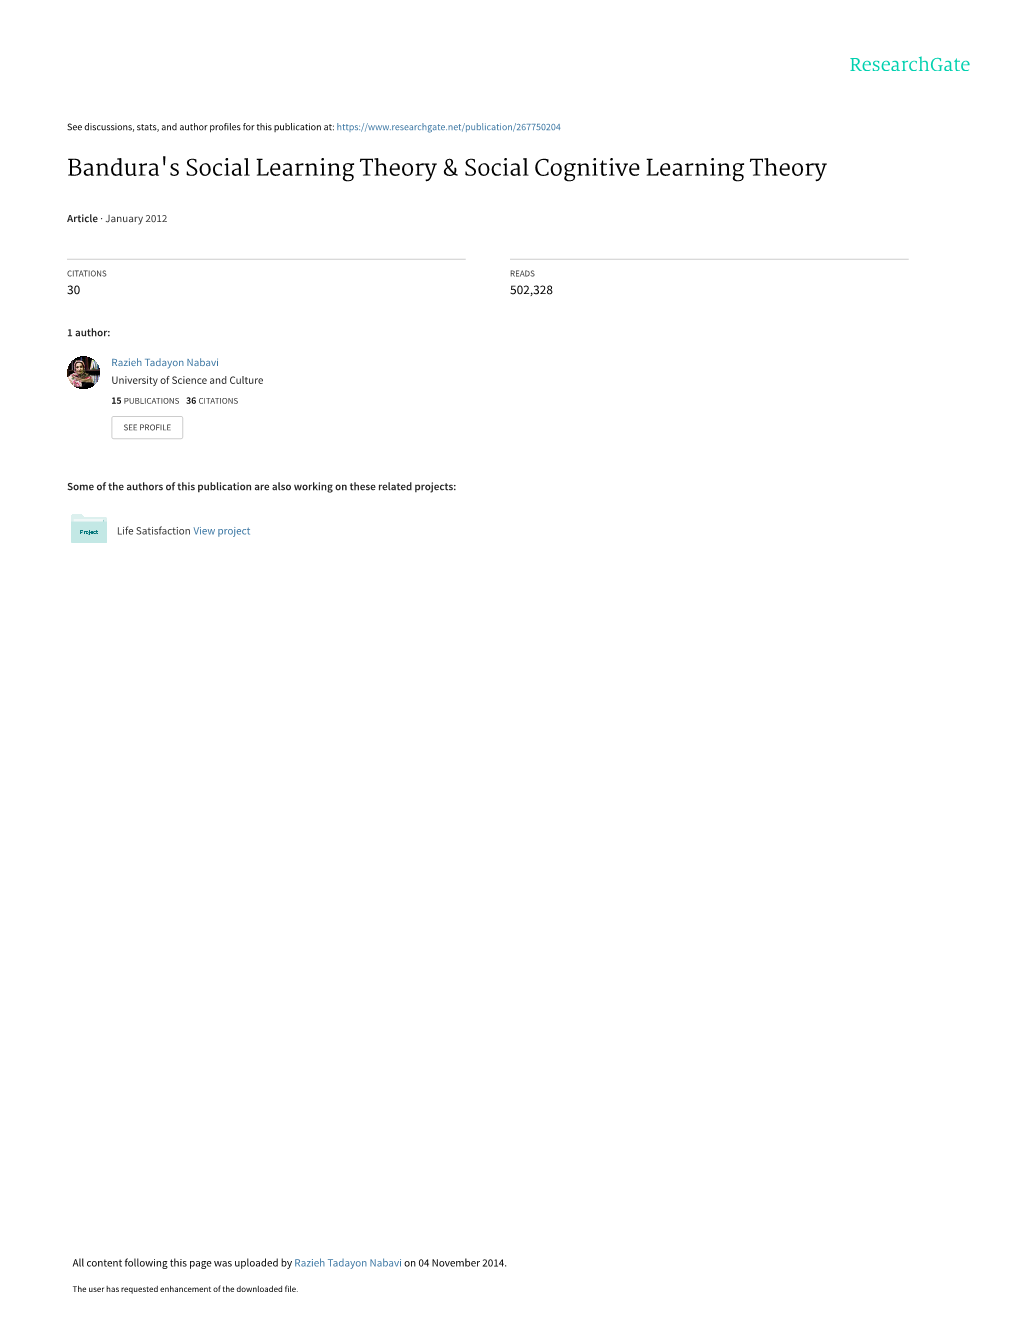 Bandura's Social Learning Theory & Social Cognitive